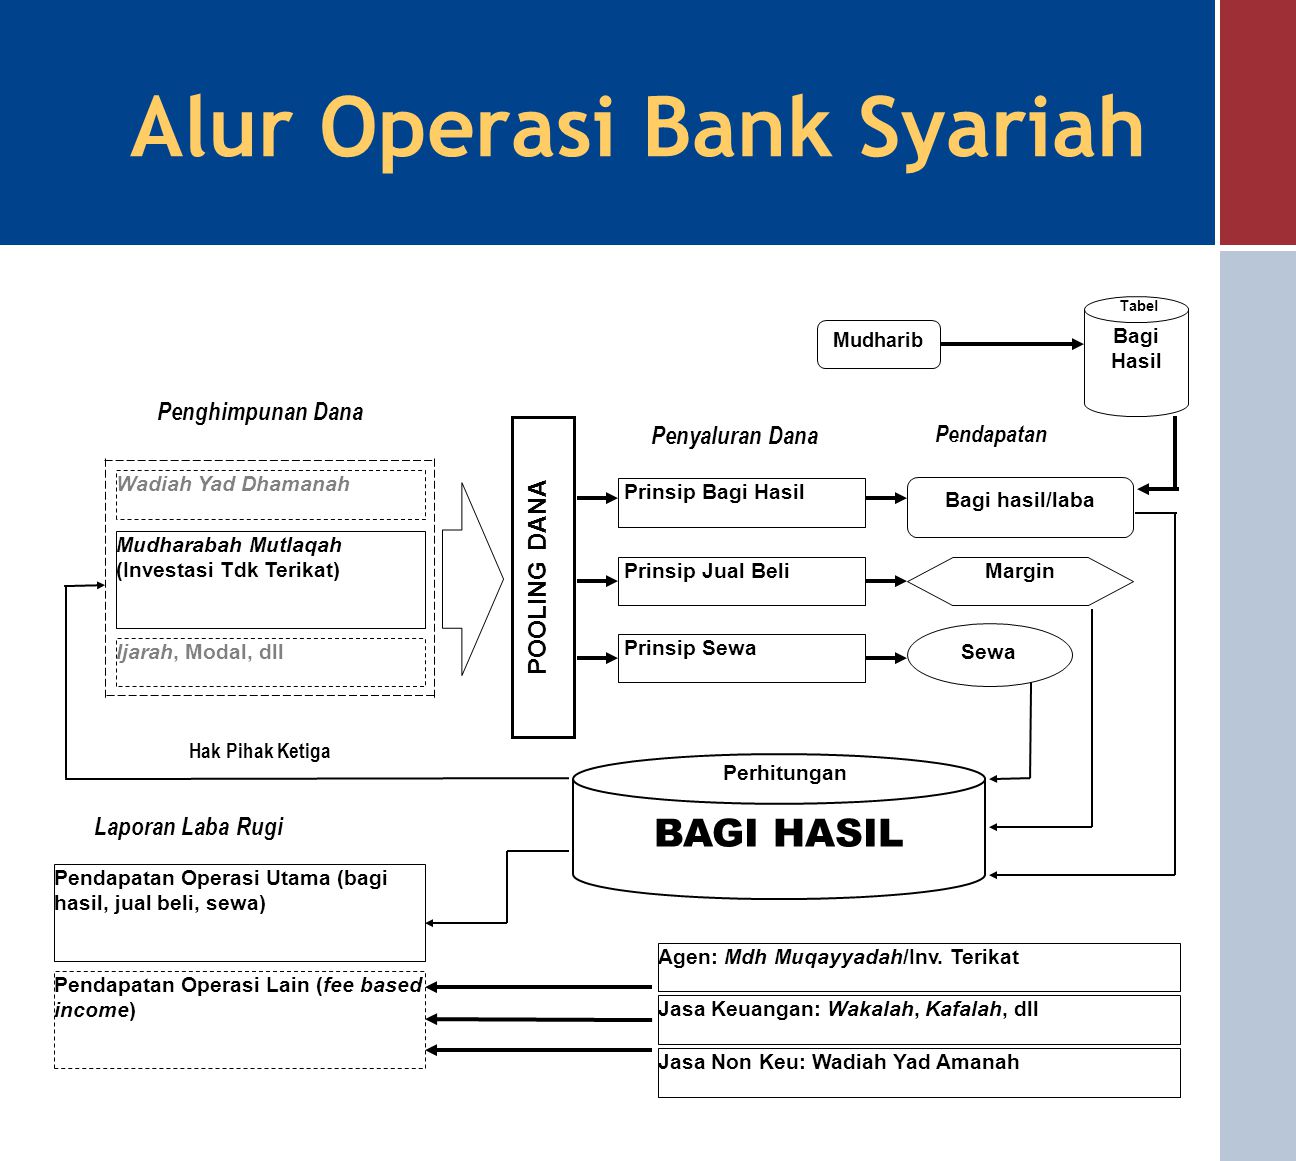 Alur Operasi Bank Syariah